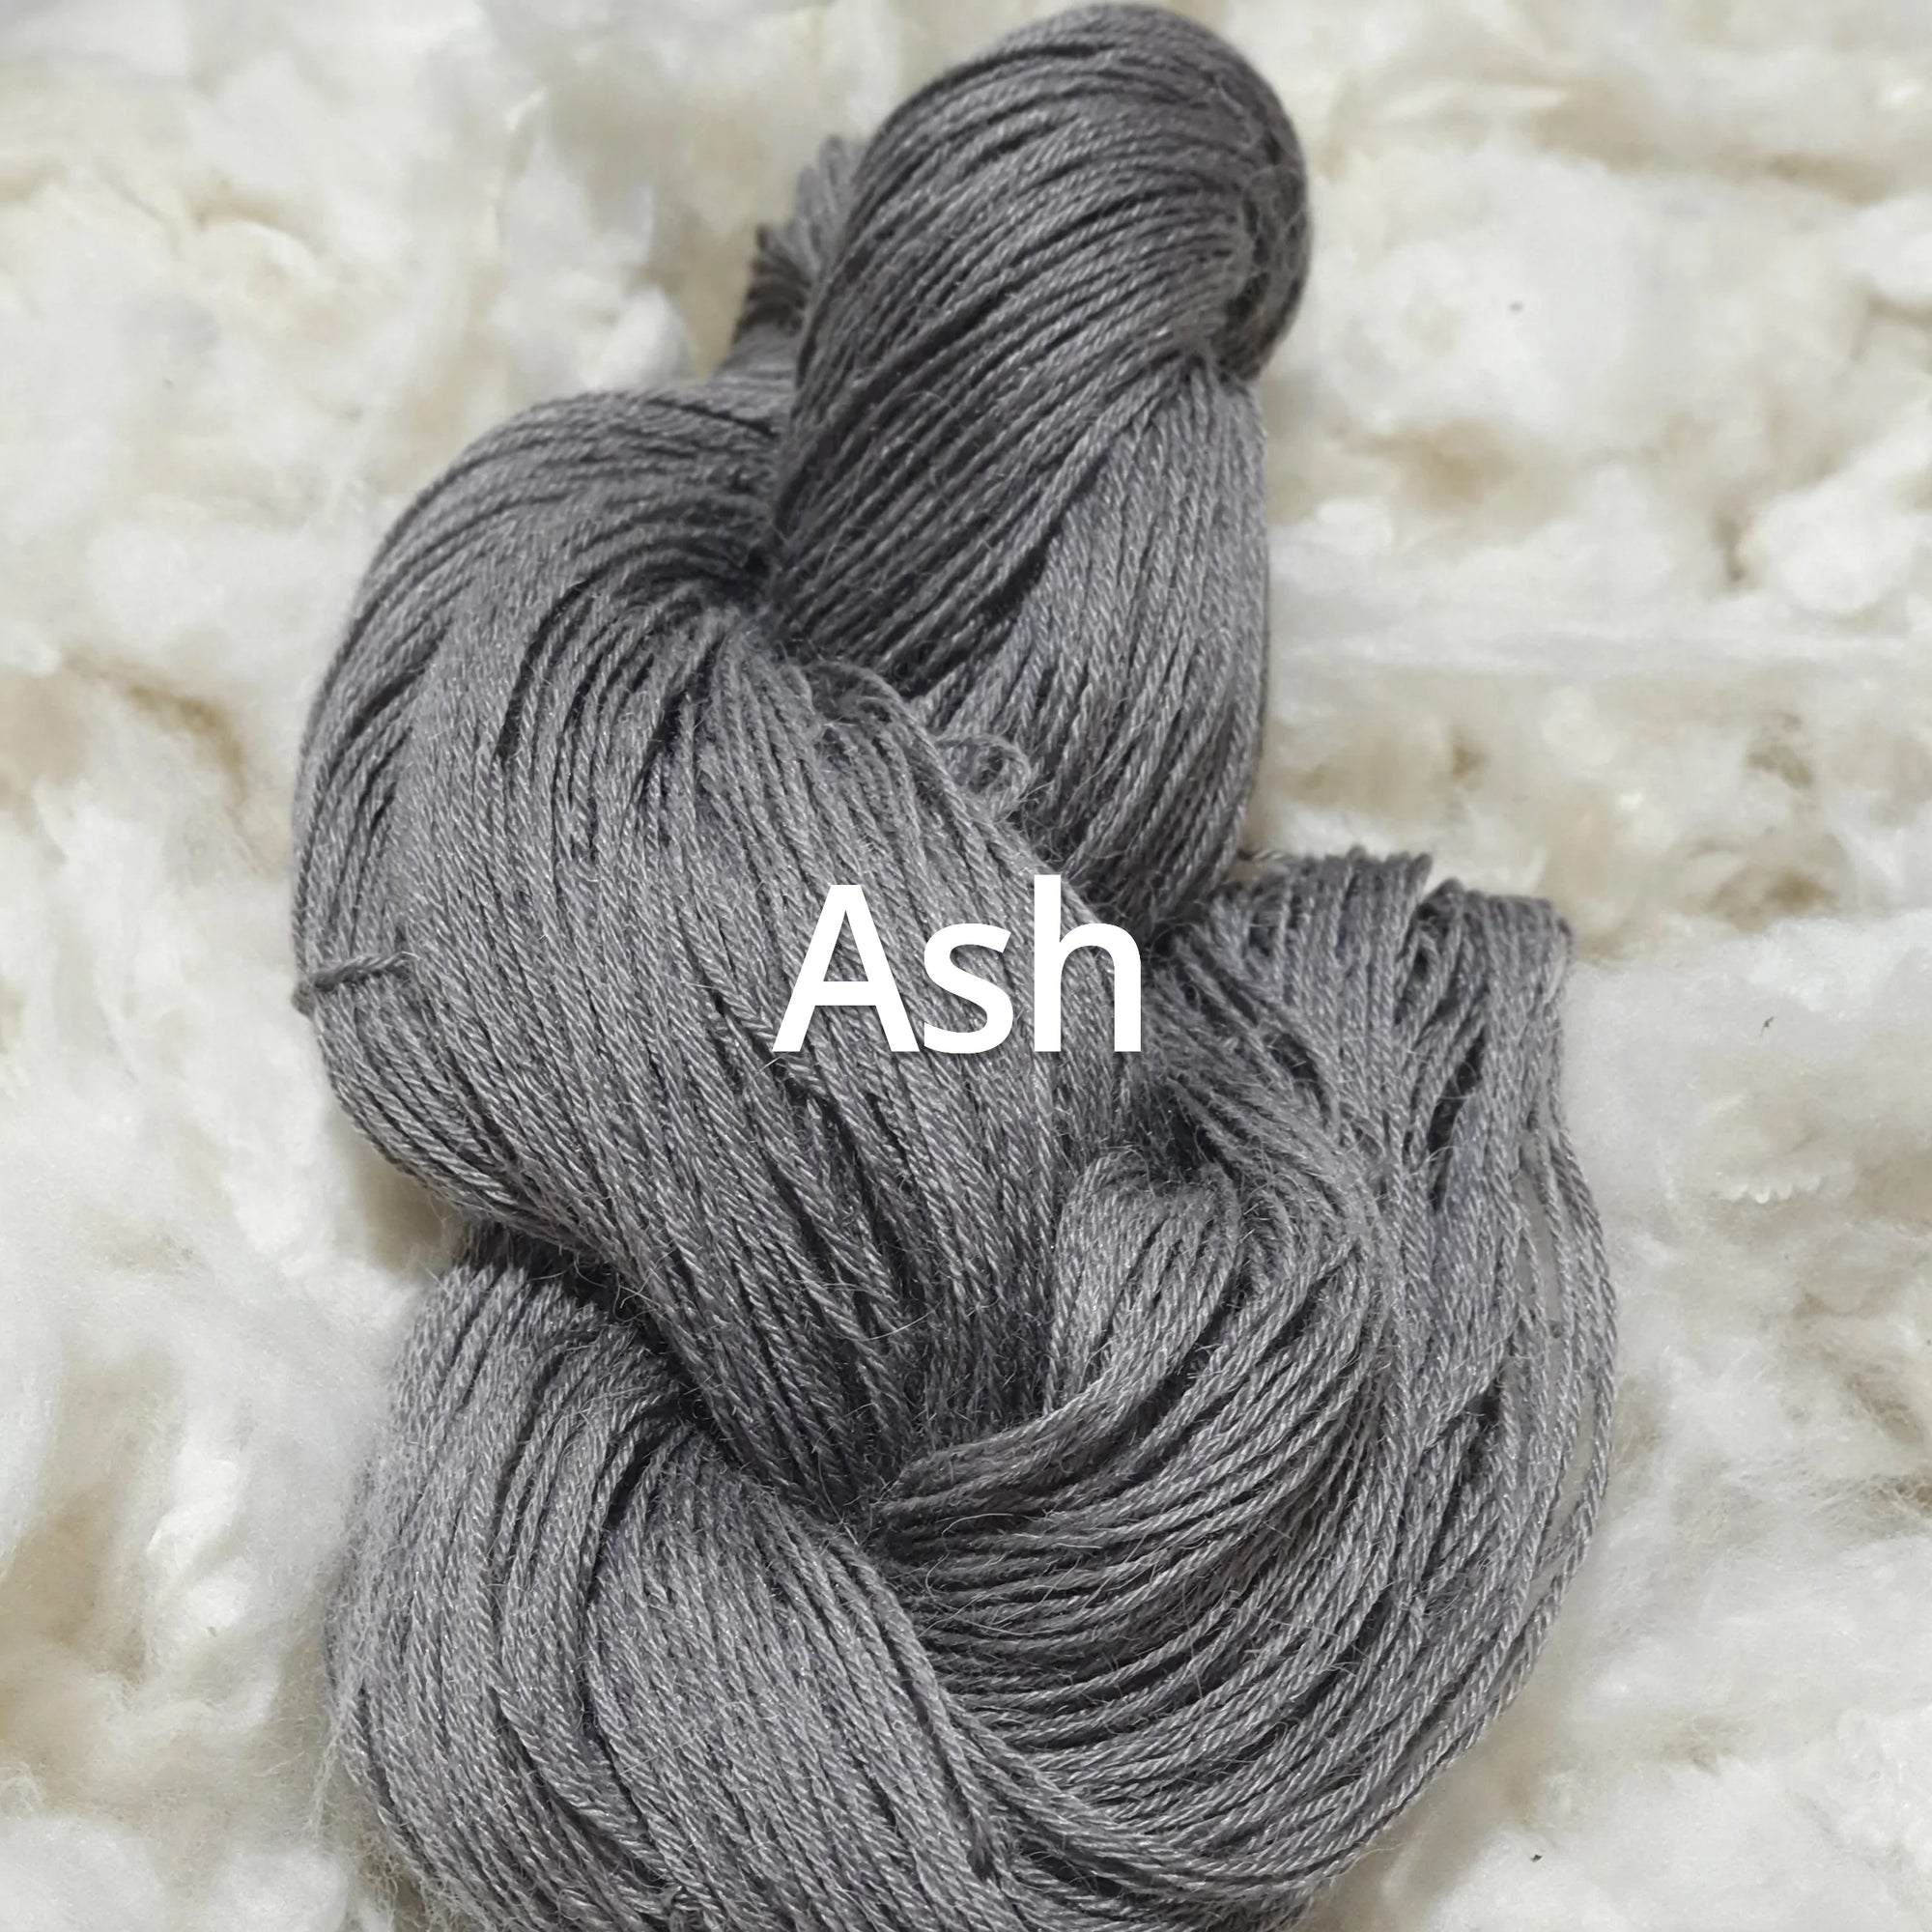 Ash - Nundle Alpaca Merino Silk 4 ply Yarn